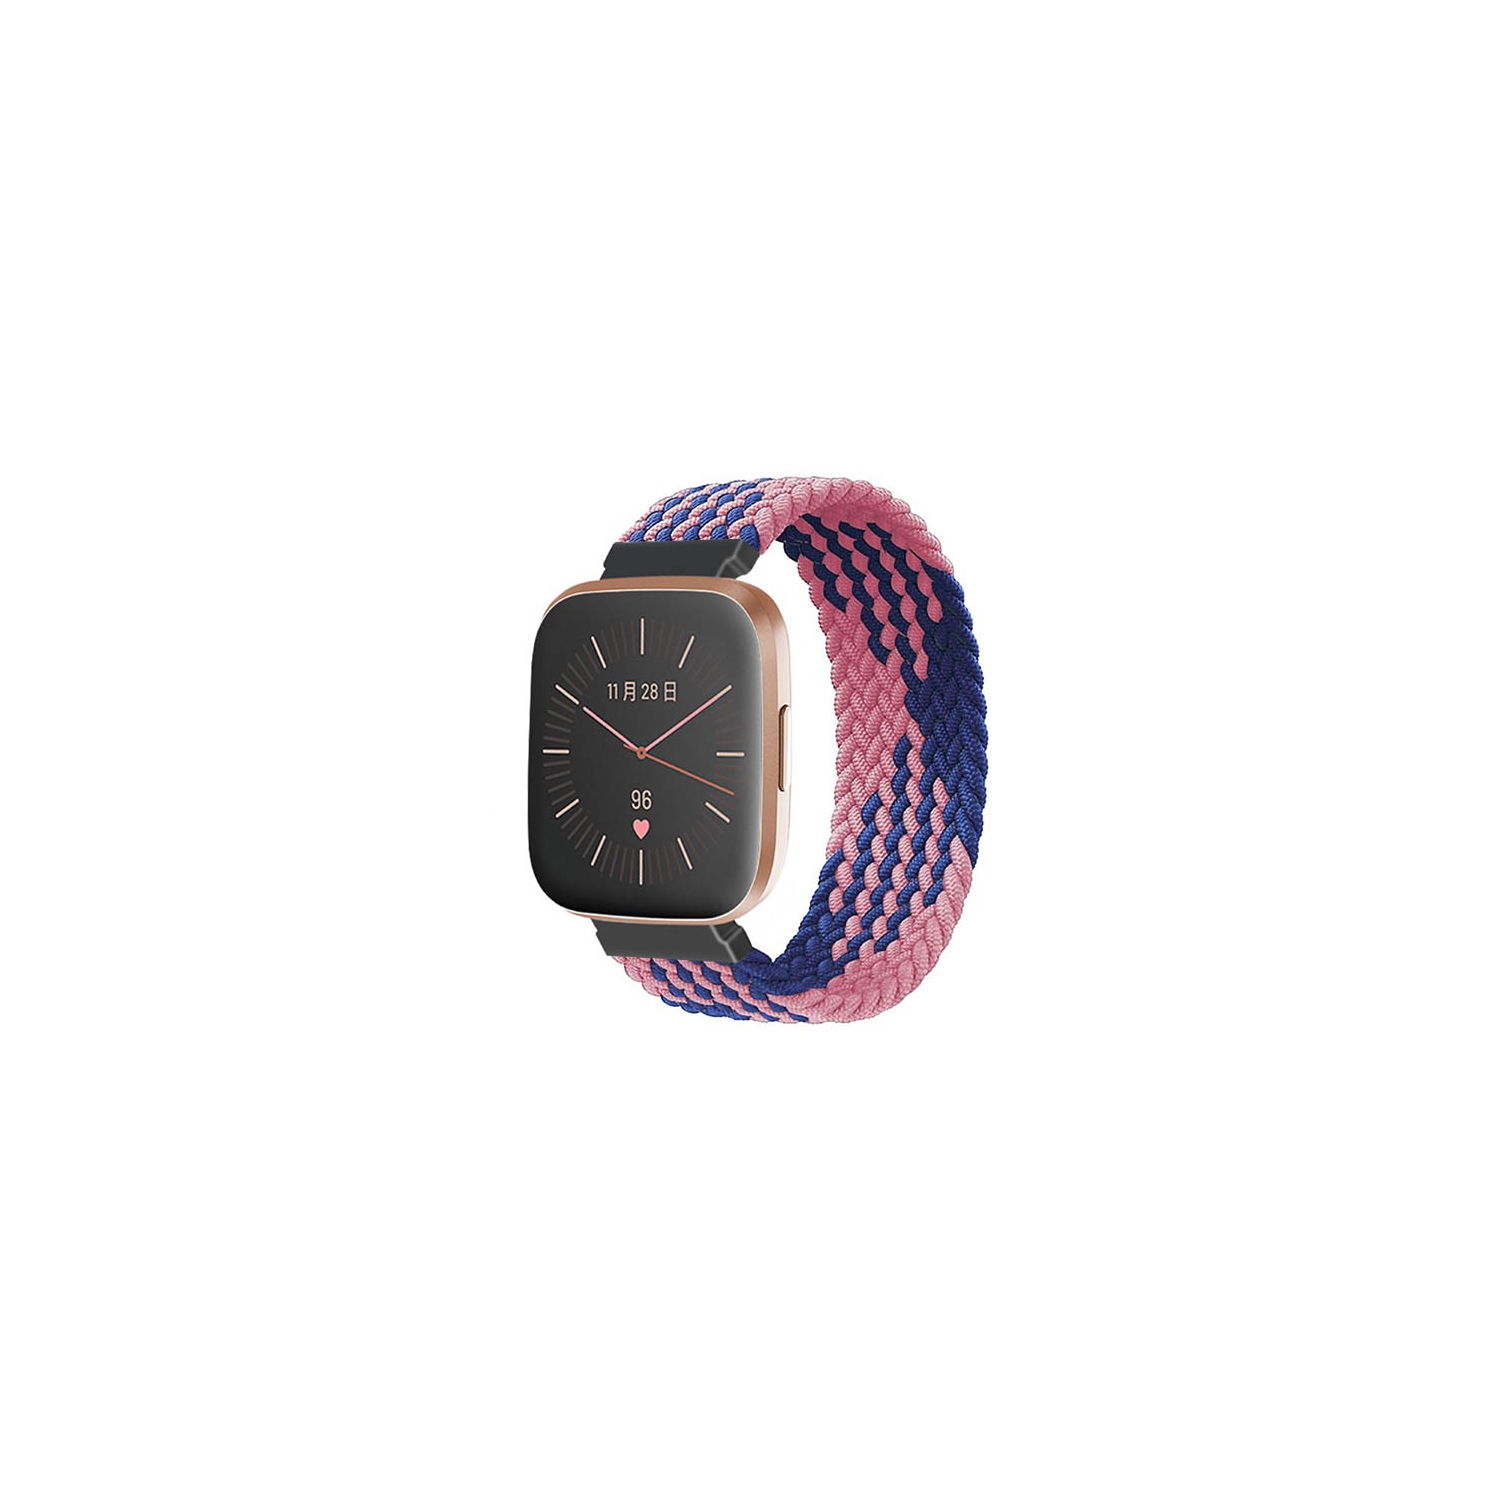 StrapsCo Patterned Elastic Nylon Watch Band Strap for Fitbit Versa & Versa 2 - S - Fits 5.8" - 6.1" Wrist - Pink & Blue Buffalo